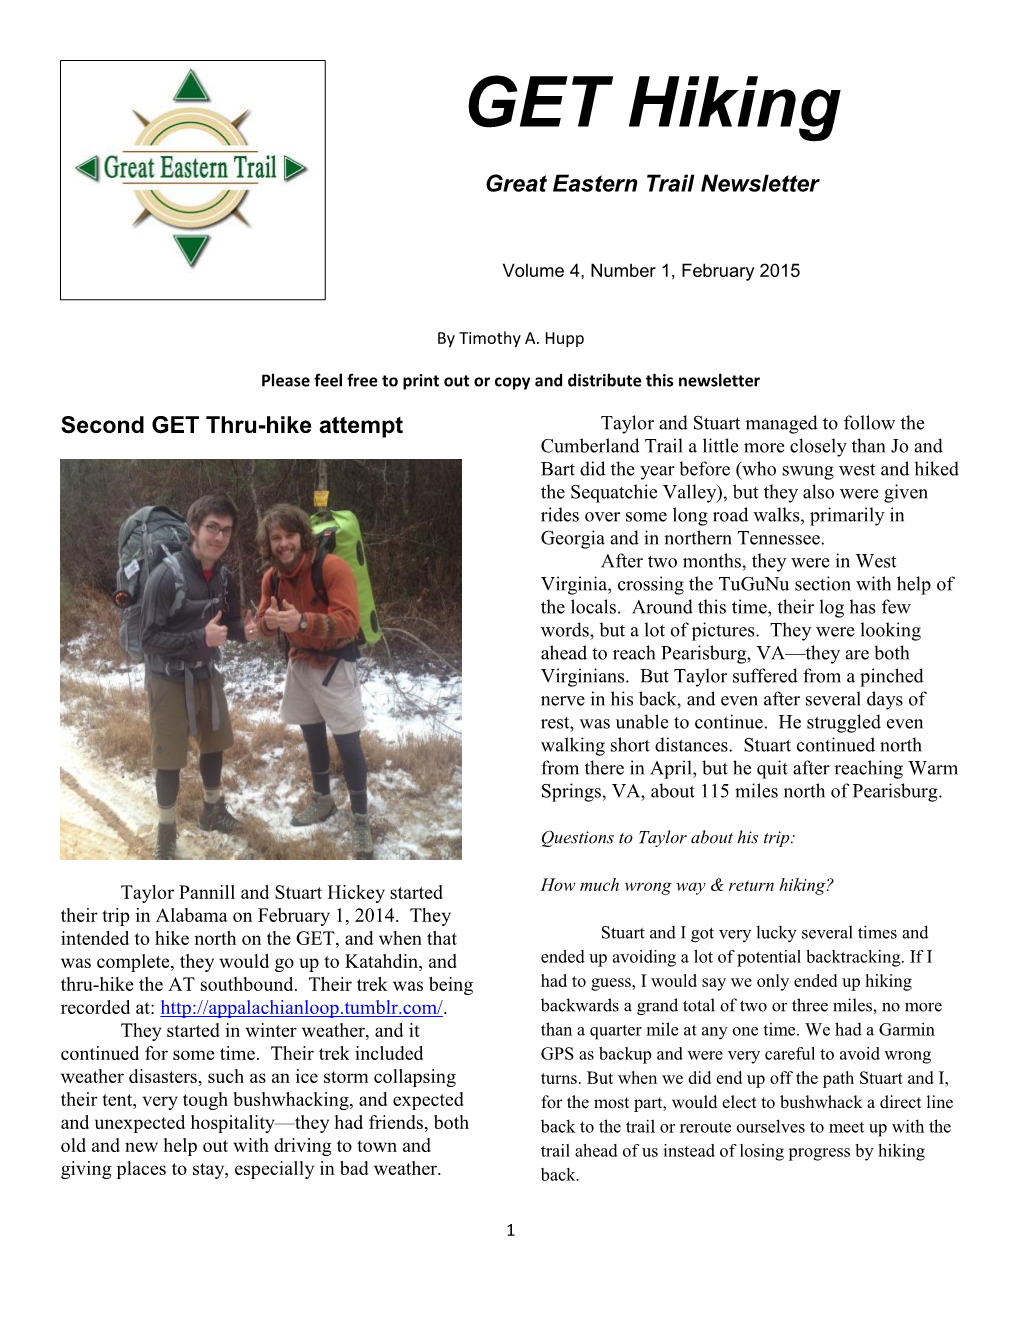 GET Newsletter Volume 4 Edition 1 February 2015